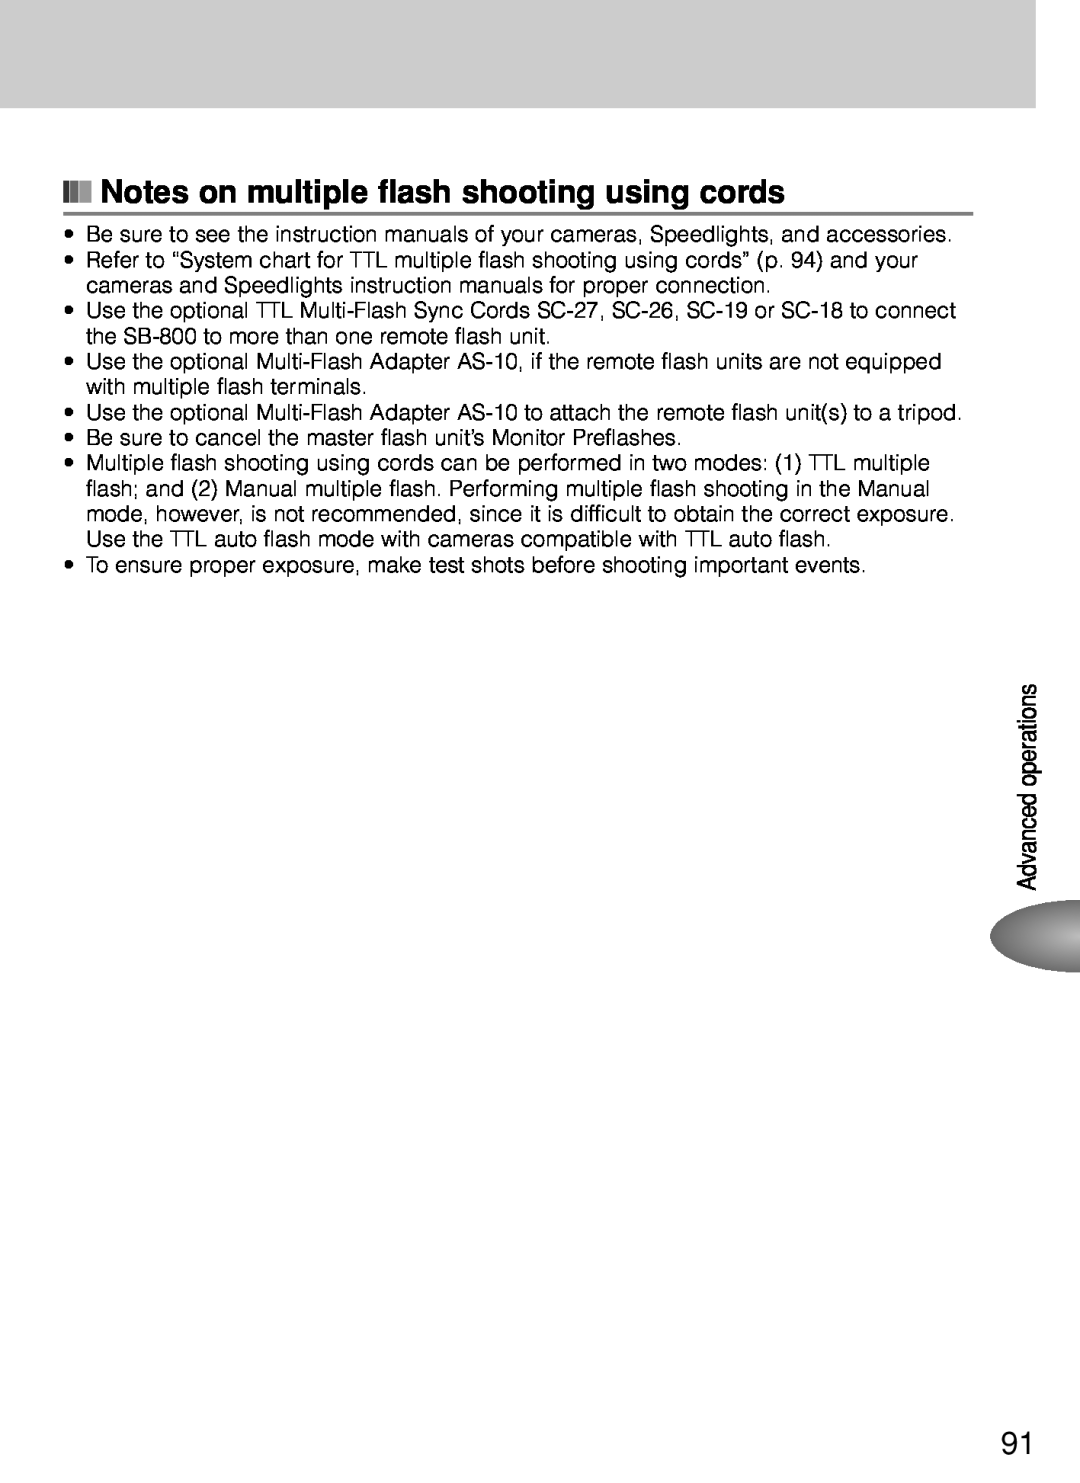 Nikon SB-800 instruction manual Notes on multiple flash shooting using cords, Advanced operations 